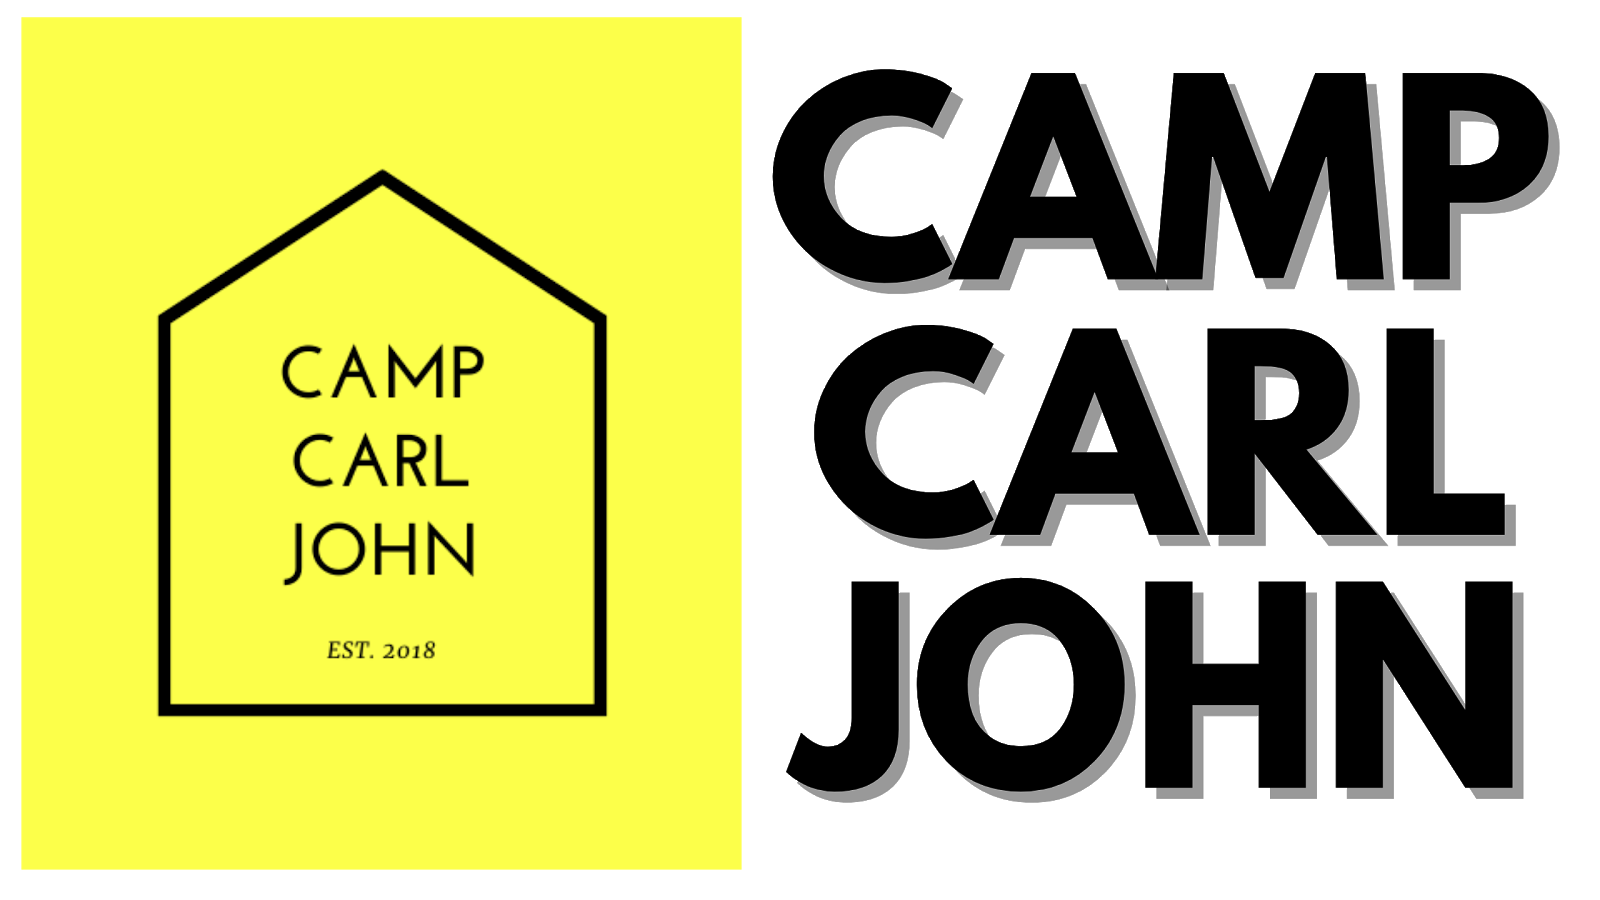 Camp Carl John